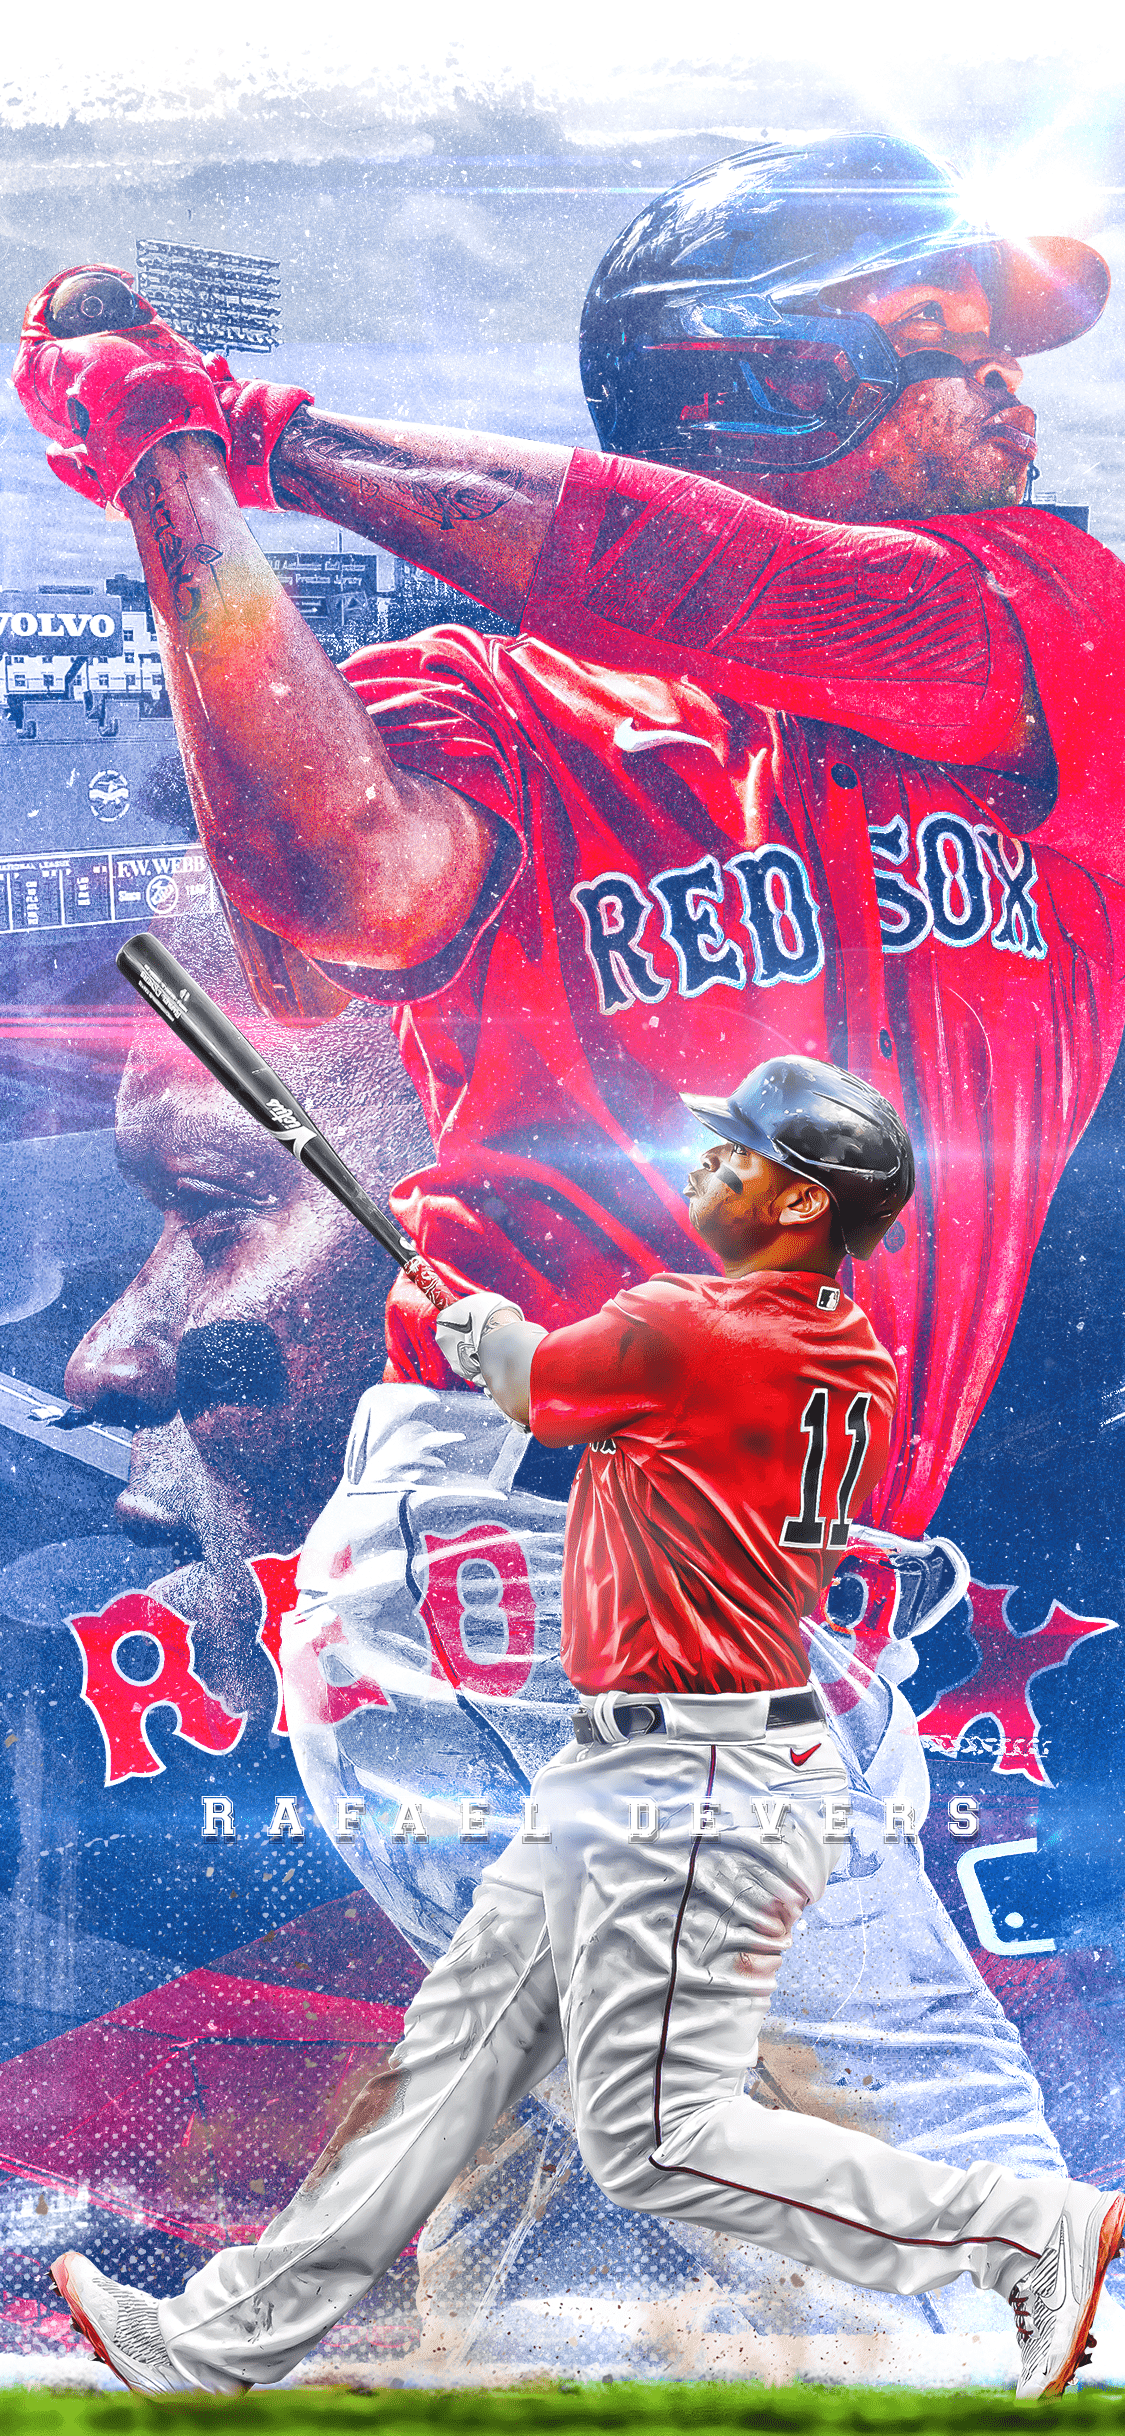 Rafael Devers, grunge art, MLB, Boston Red Sox, baseman, baseball, Rafael  Devers Calcano, HD wallpaper